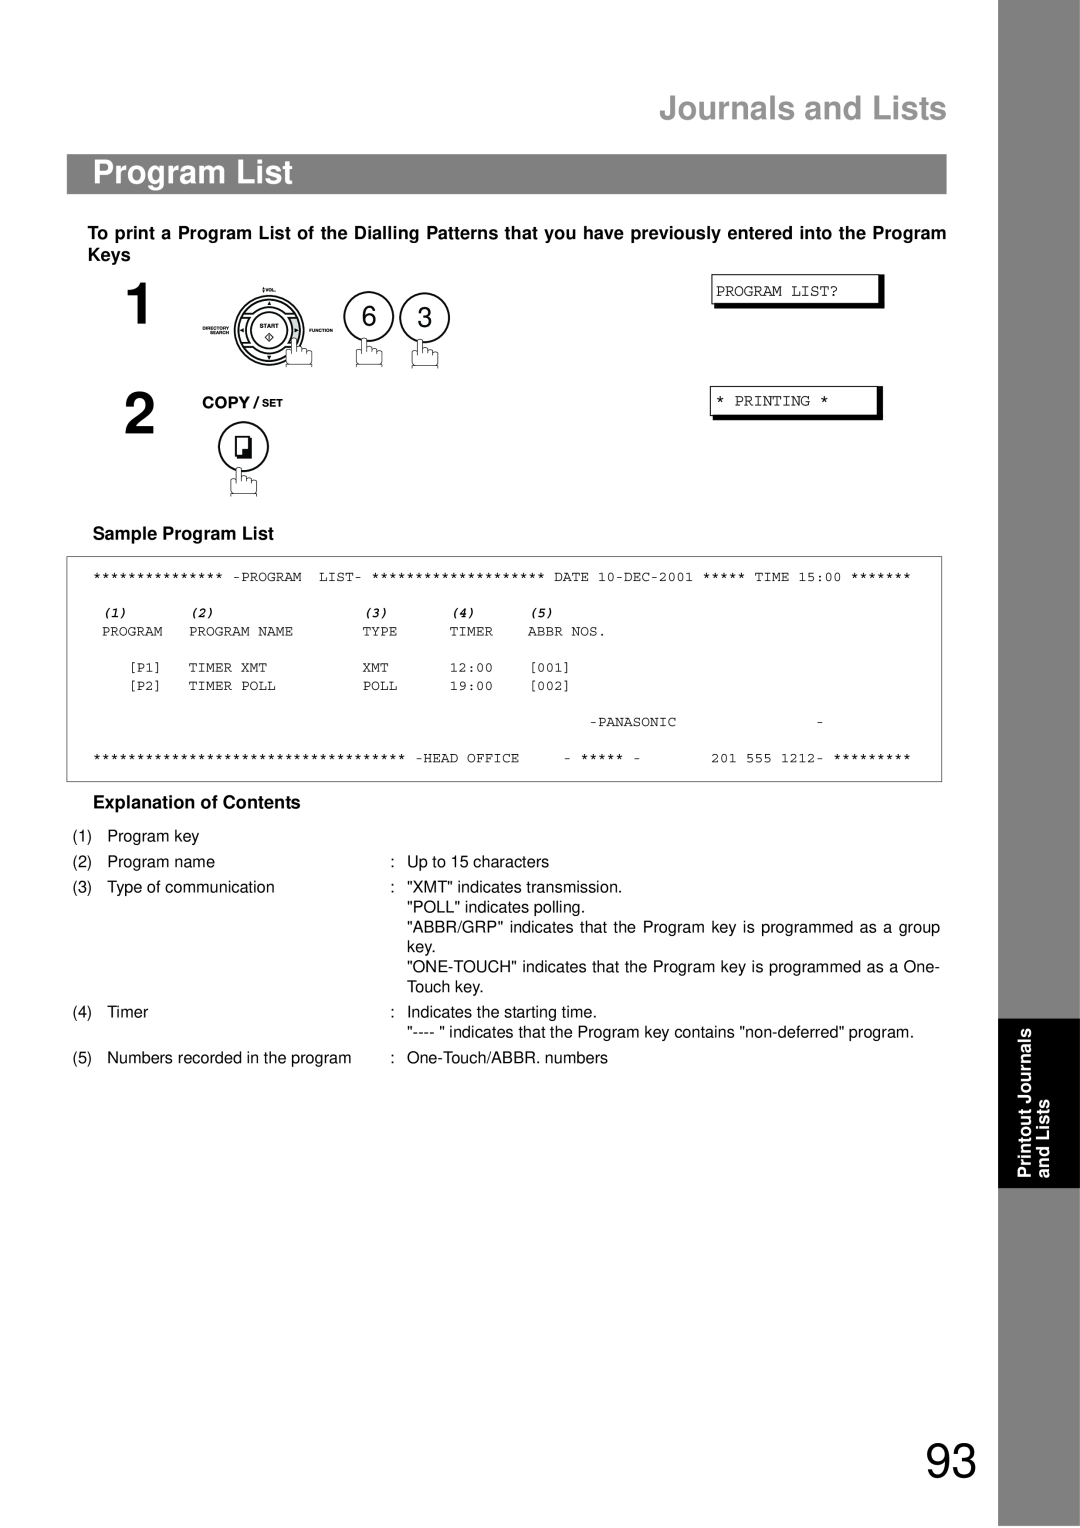 Castelle UF-490 appendix 1 6, Sample Program List, Explanation of Contents, Program List? Printing 